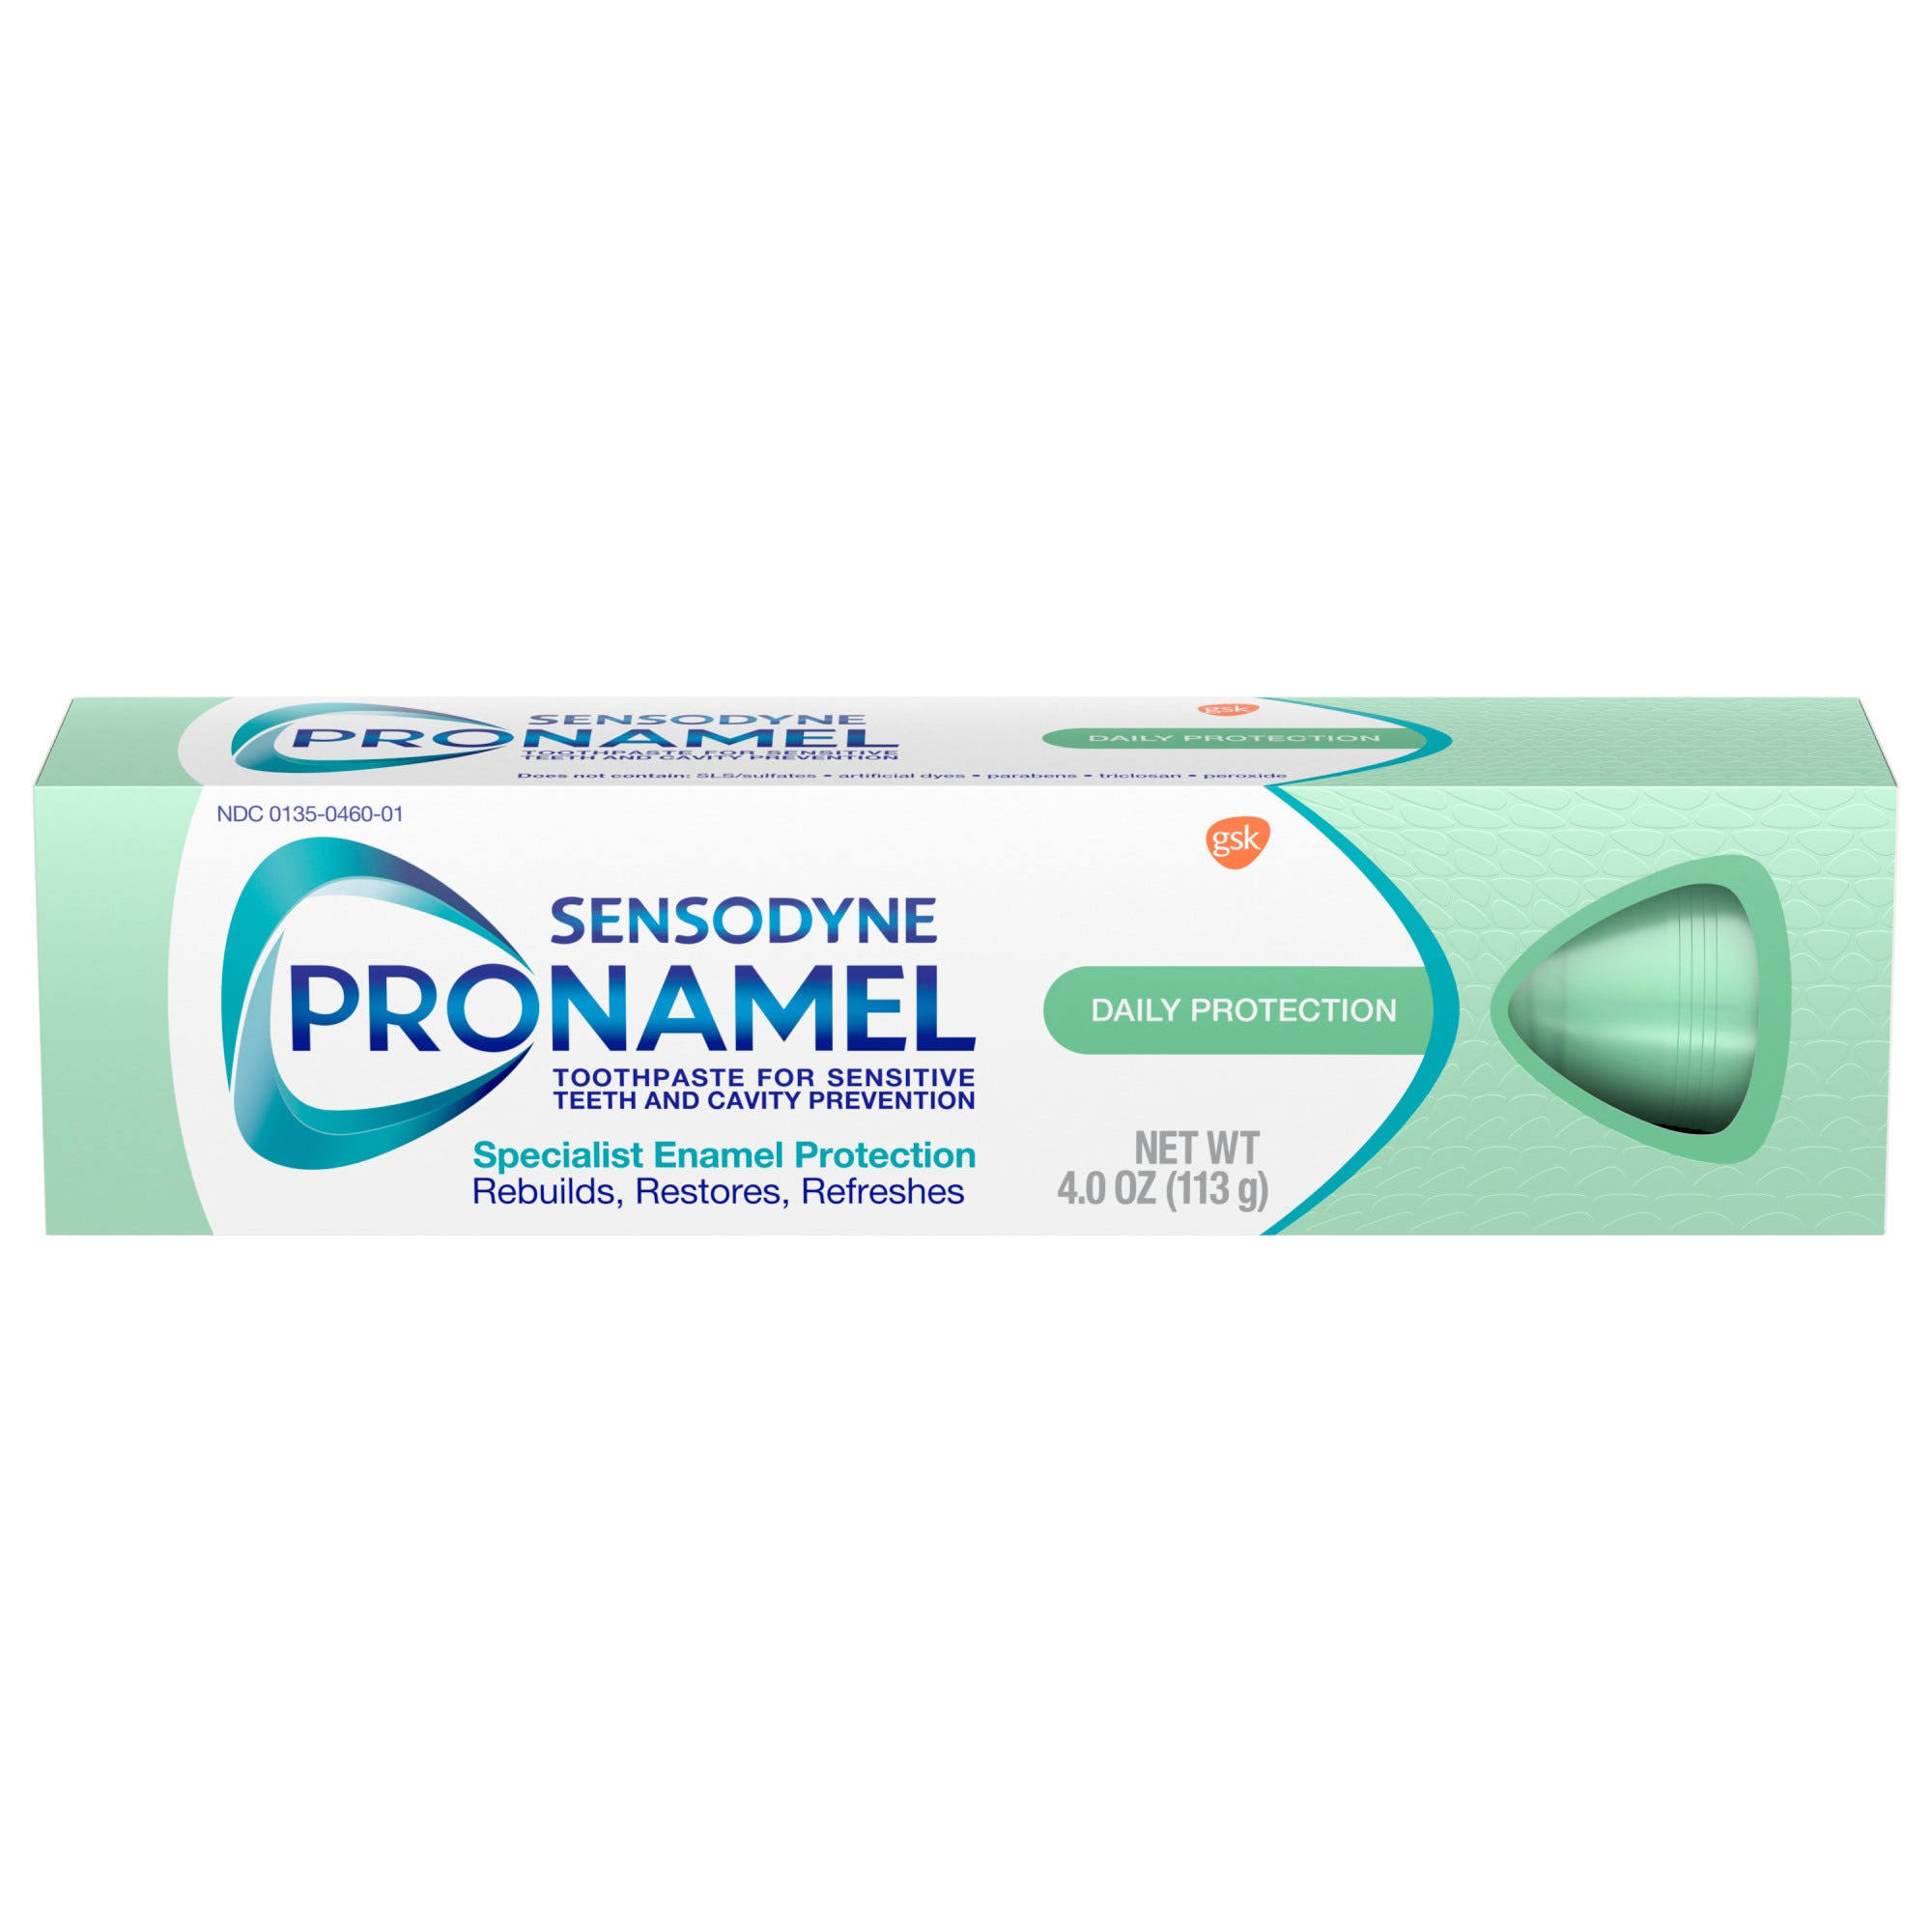 Sensodyne Pronamel Daily Protection MintEssence Fluoride Toothpaste - 4oz